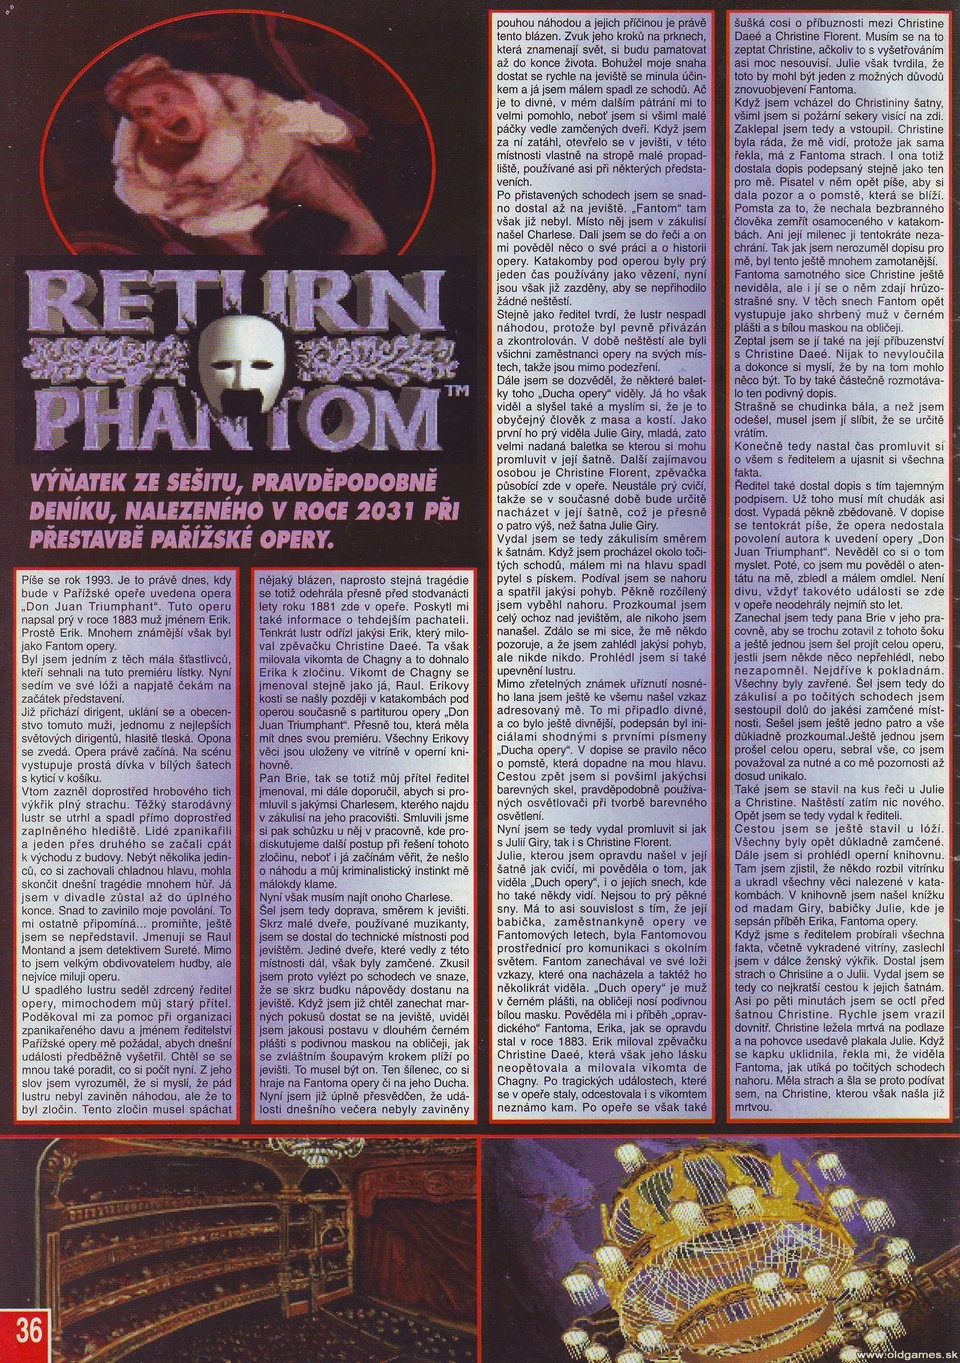 Return of the Phantom, Návod